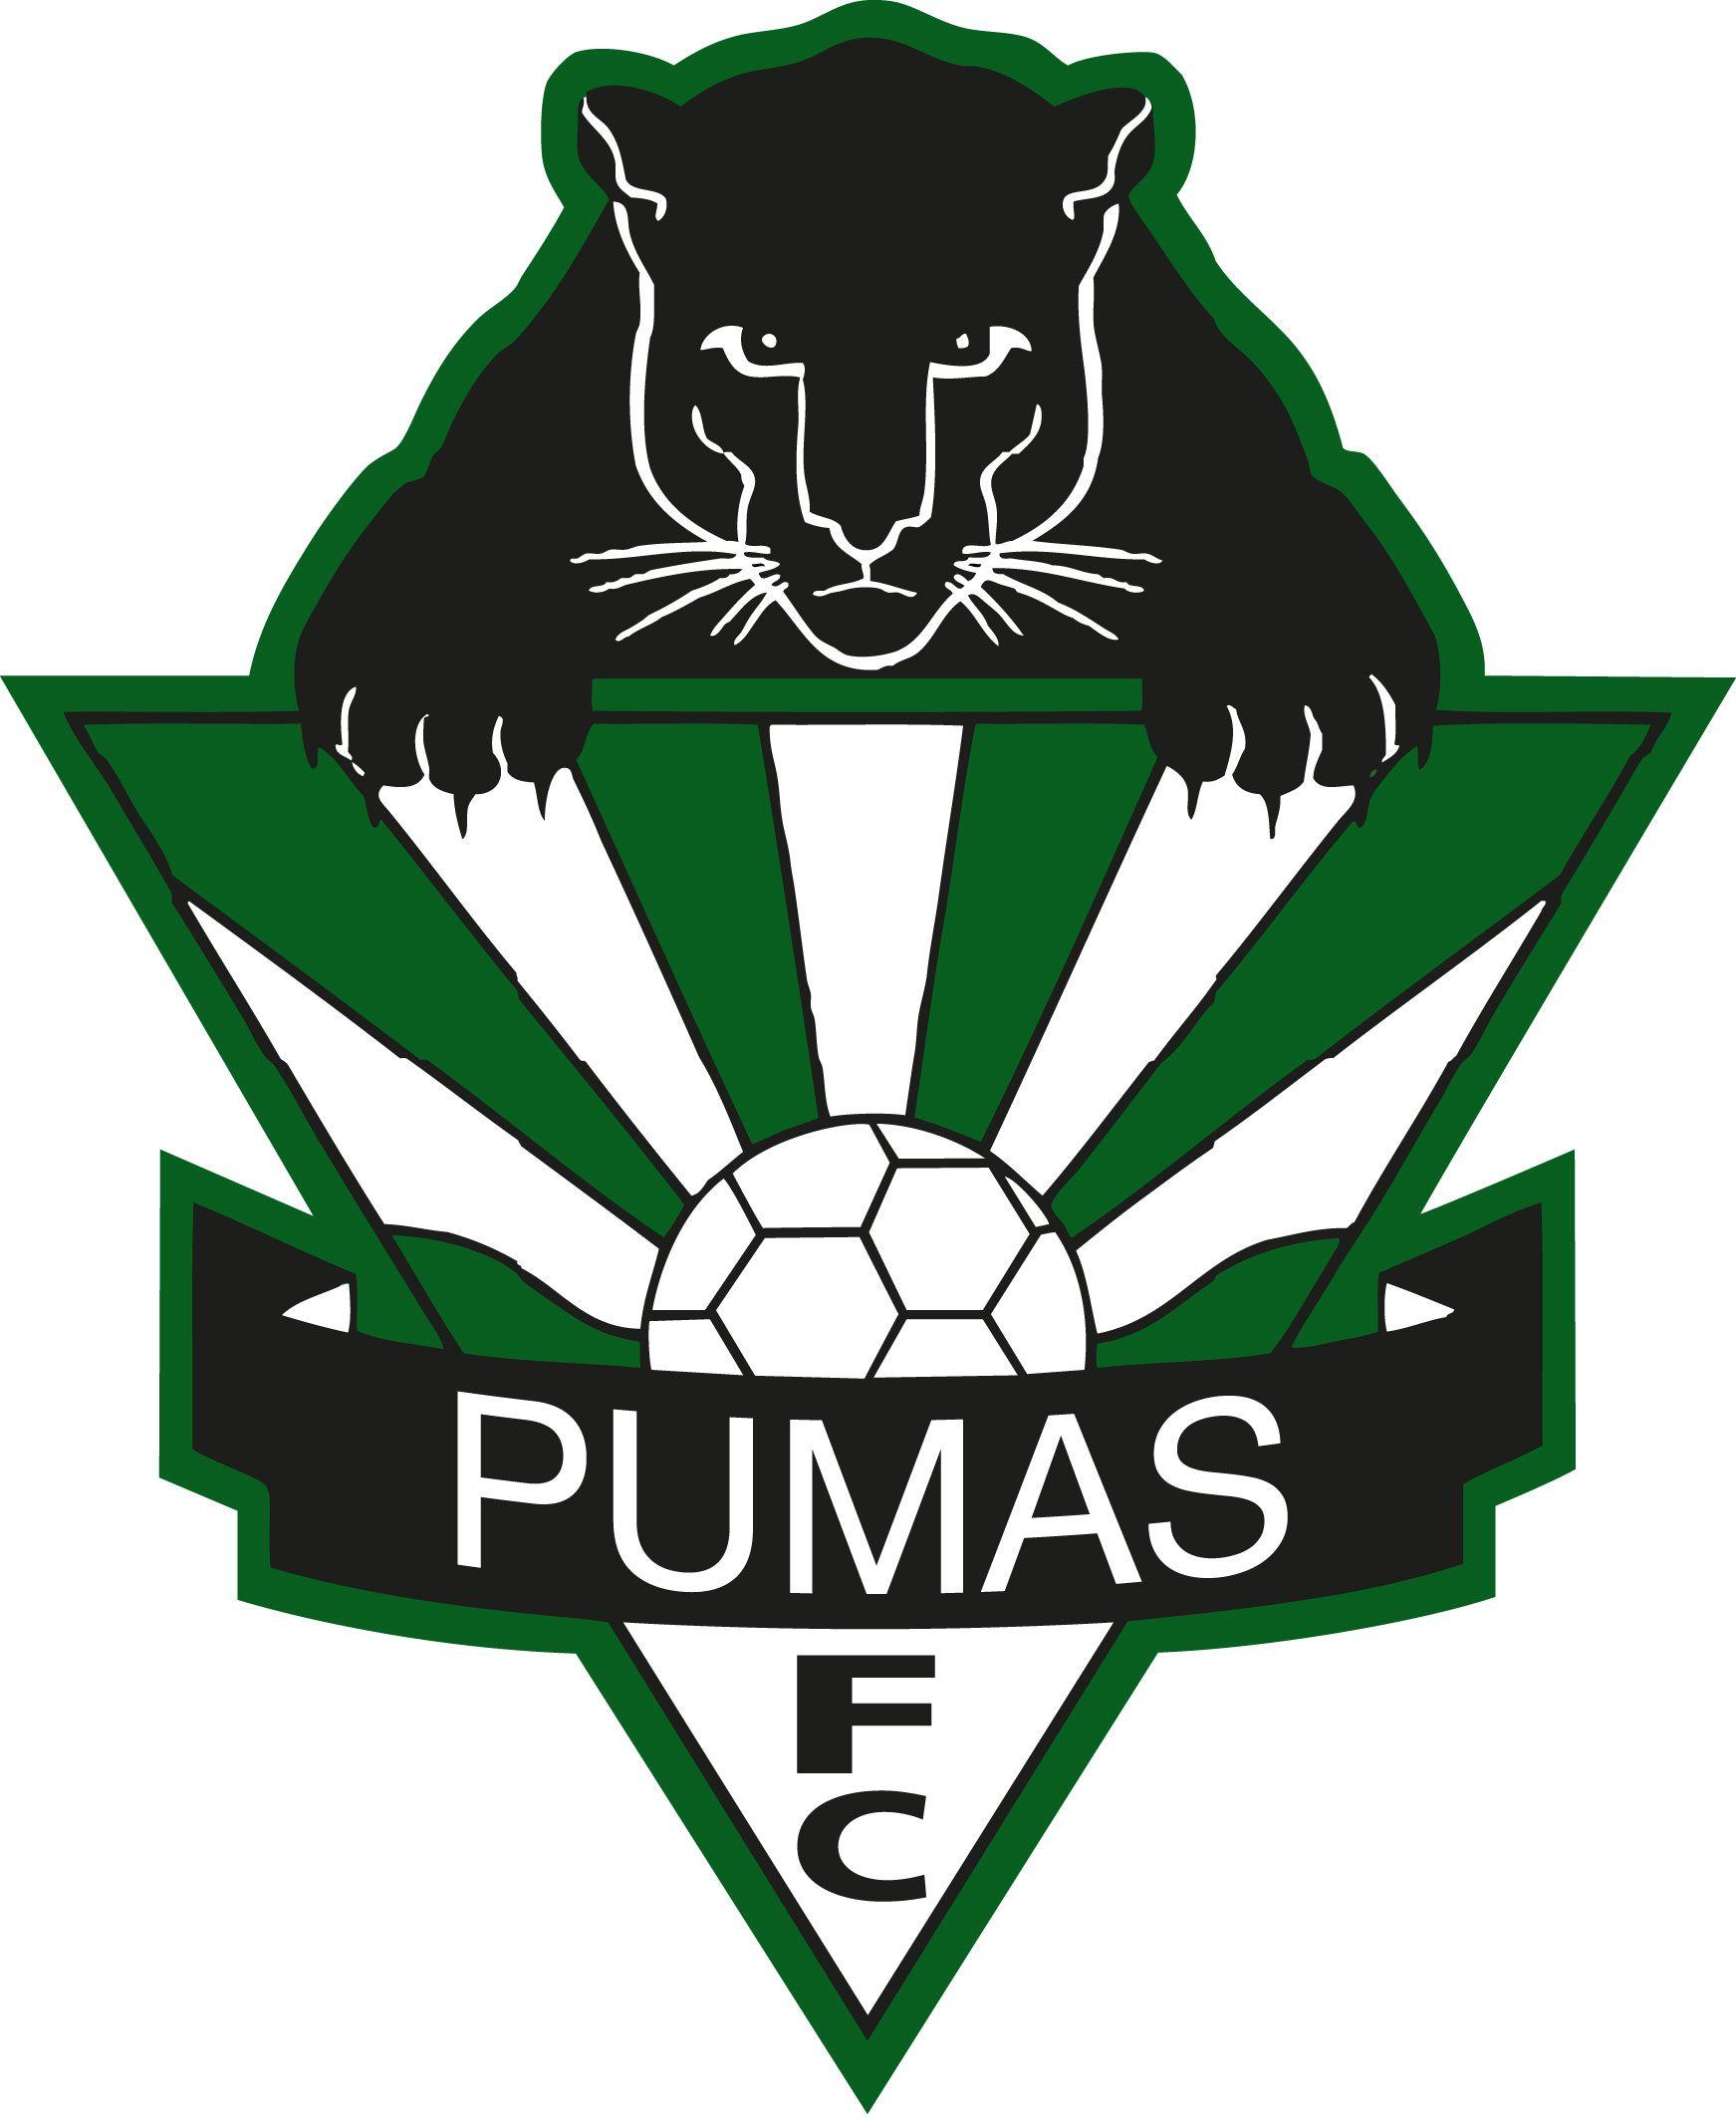 Pumas Soccer Logo - About. Hills Pumas FC